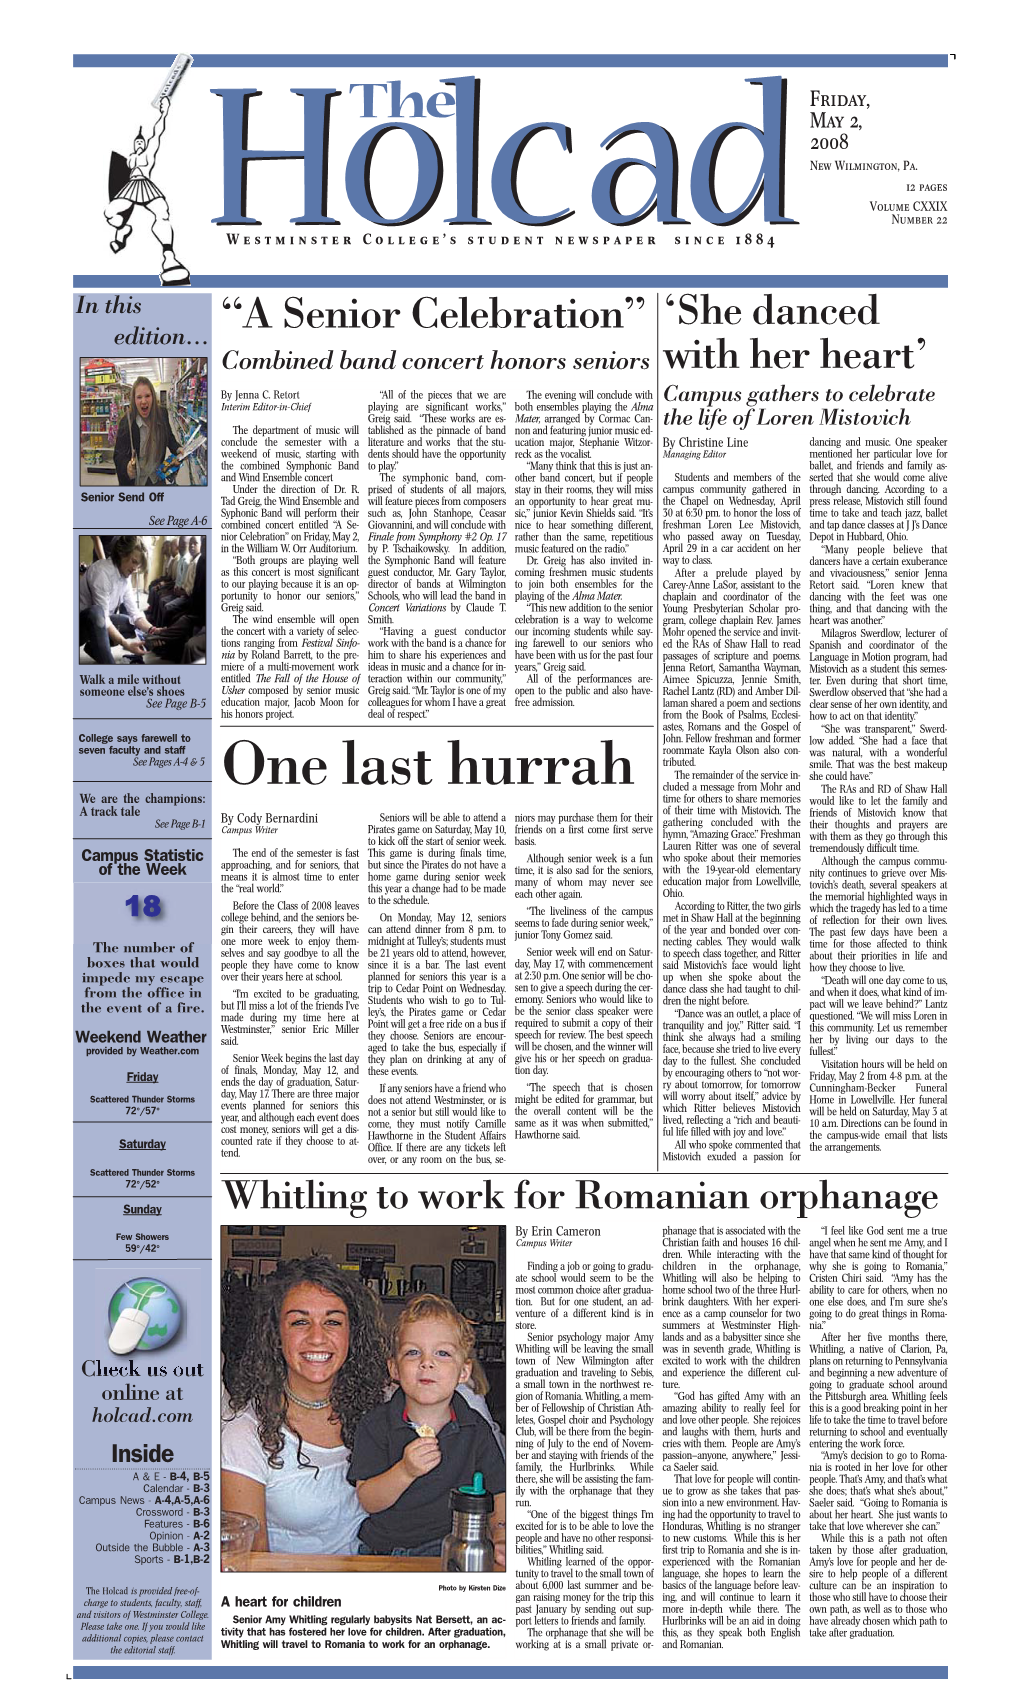 The Holcad, November 7, 2007 (Page 1)